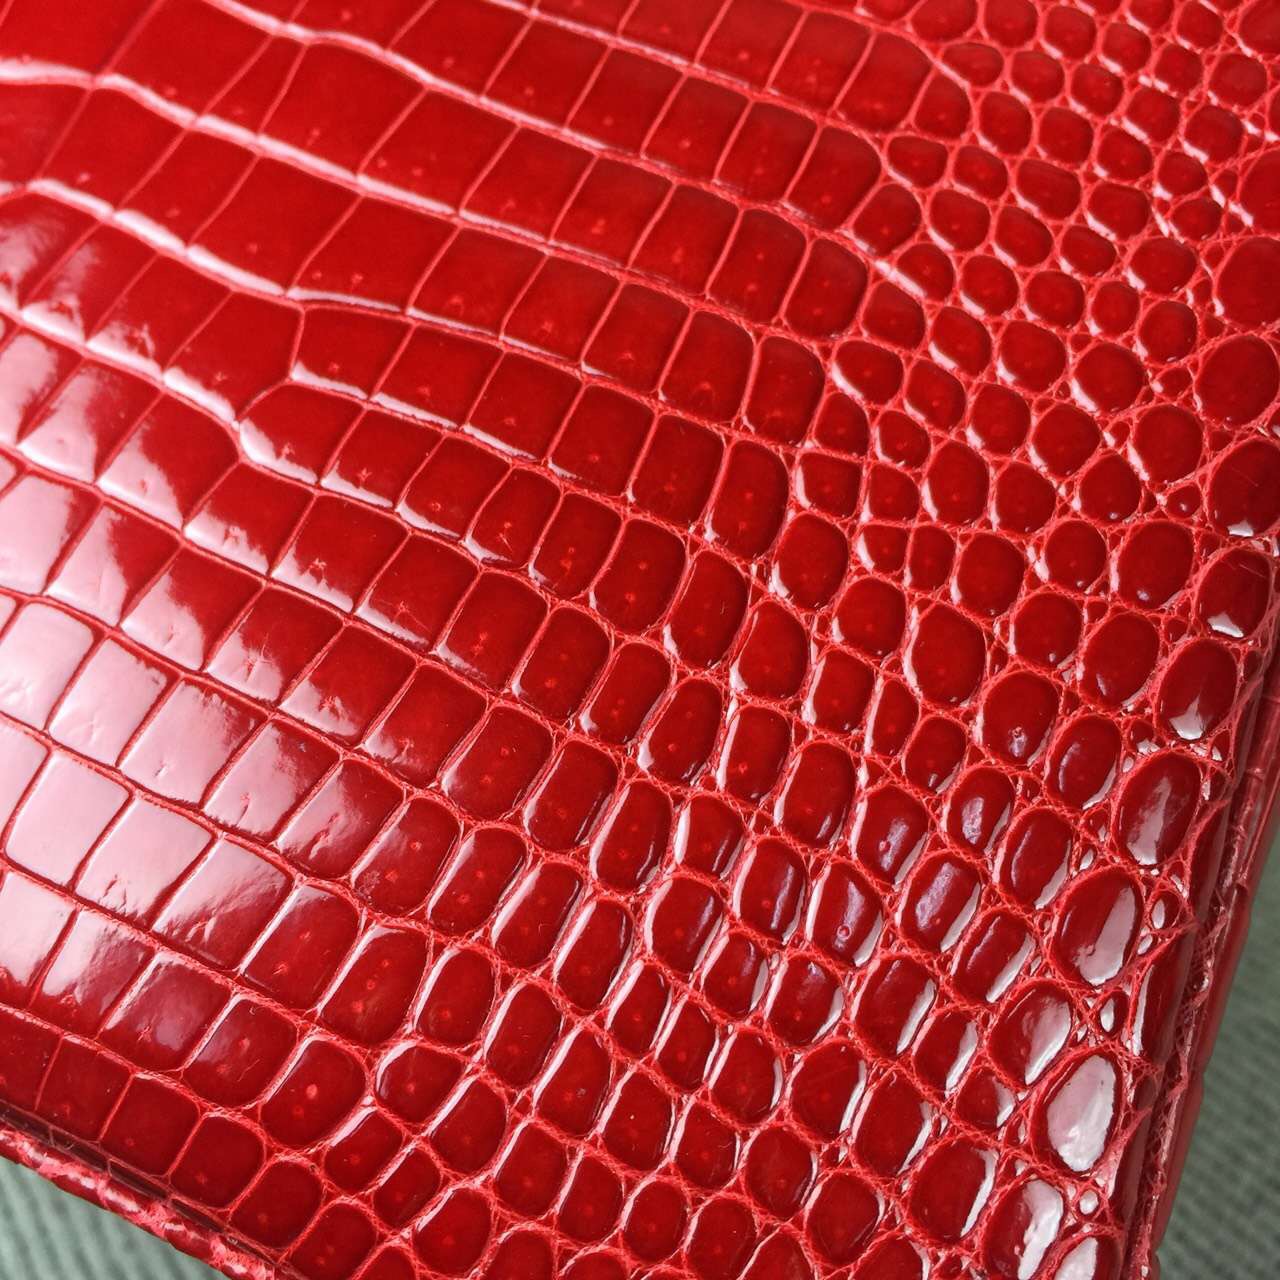 Hot Sale Hermes Crocodile Shiny Leather Birkin25cm in Braise Red